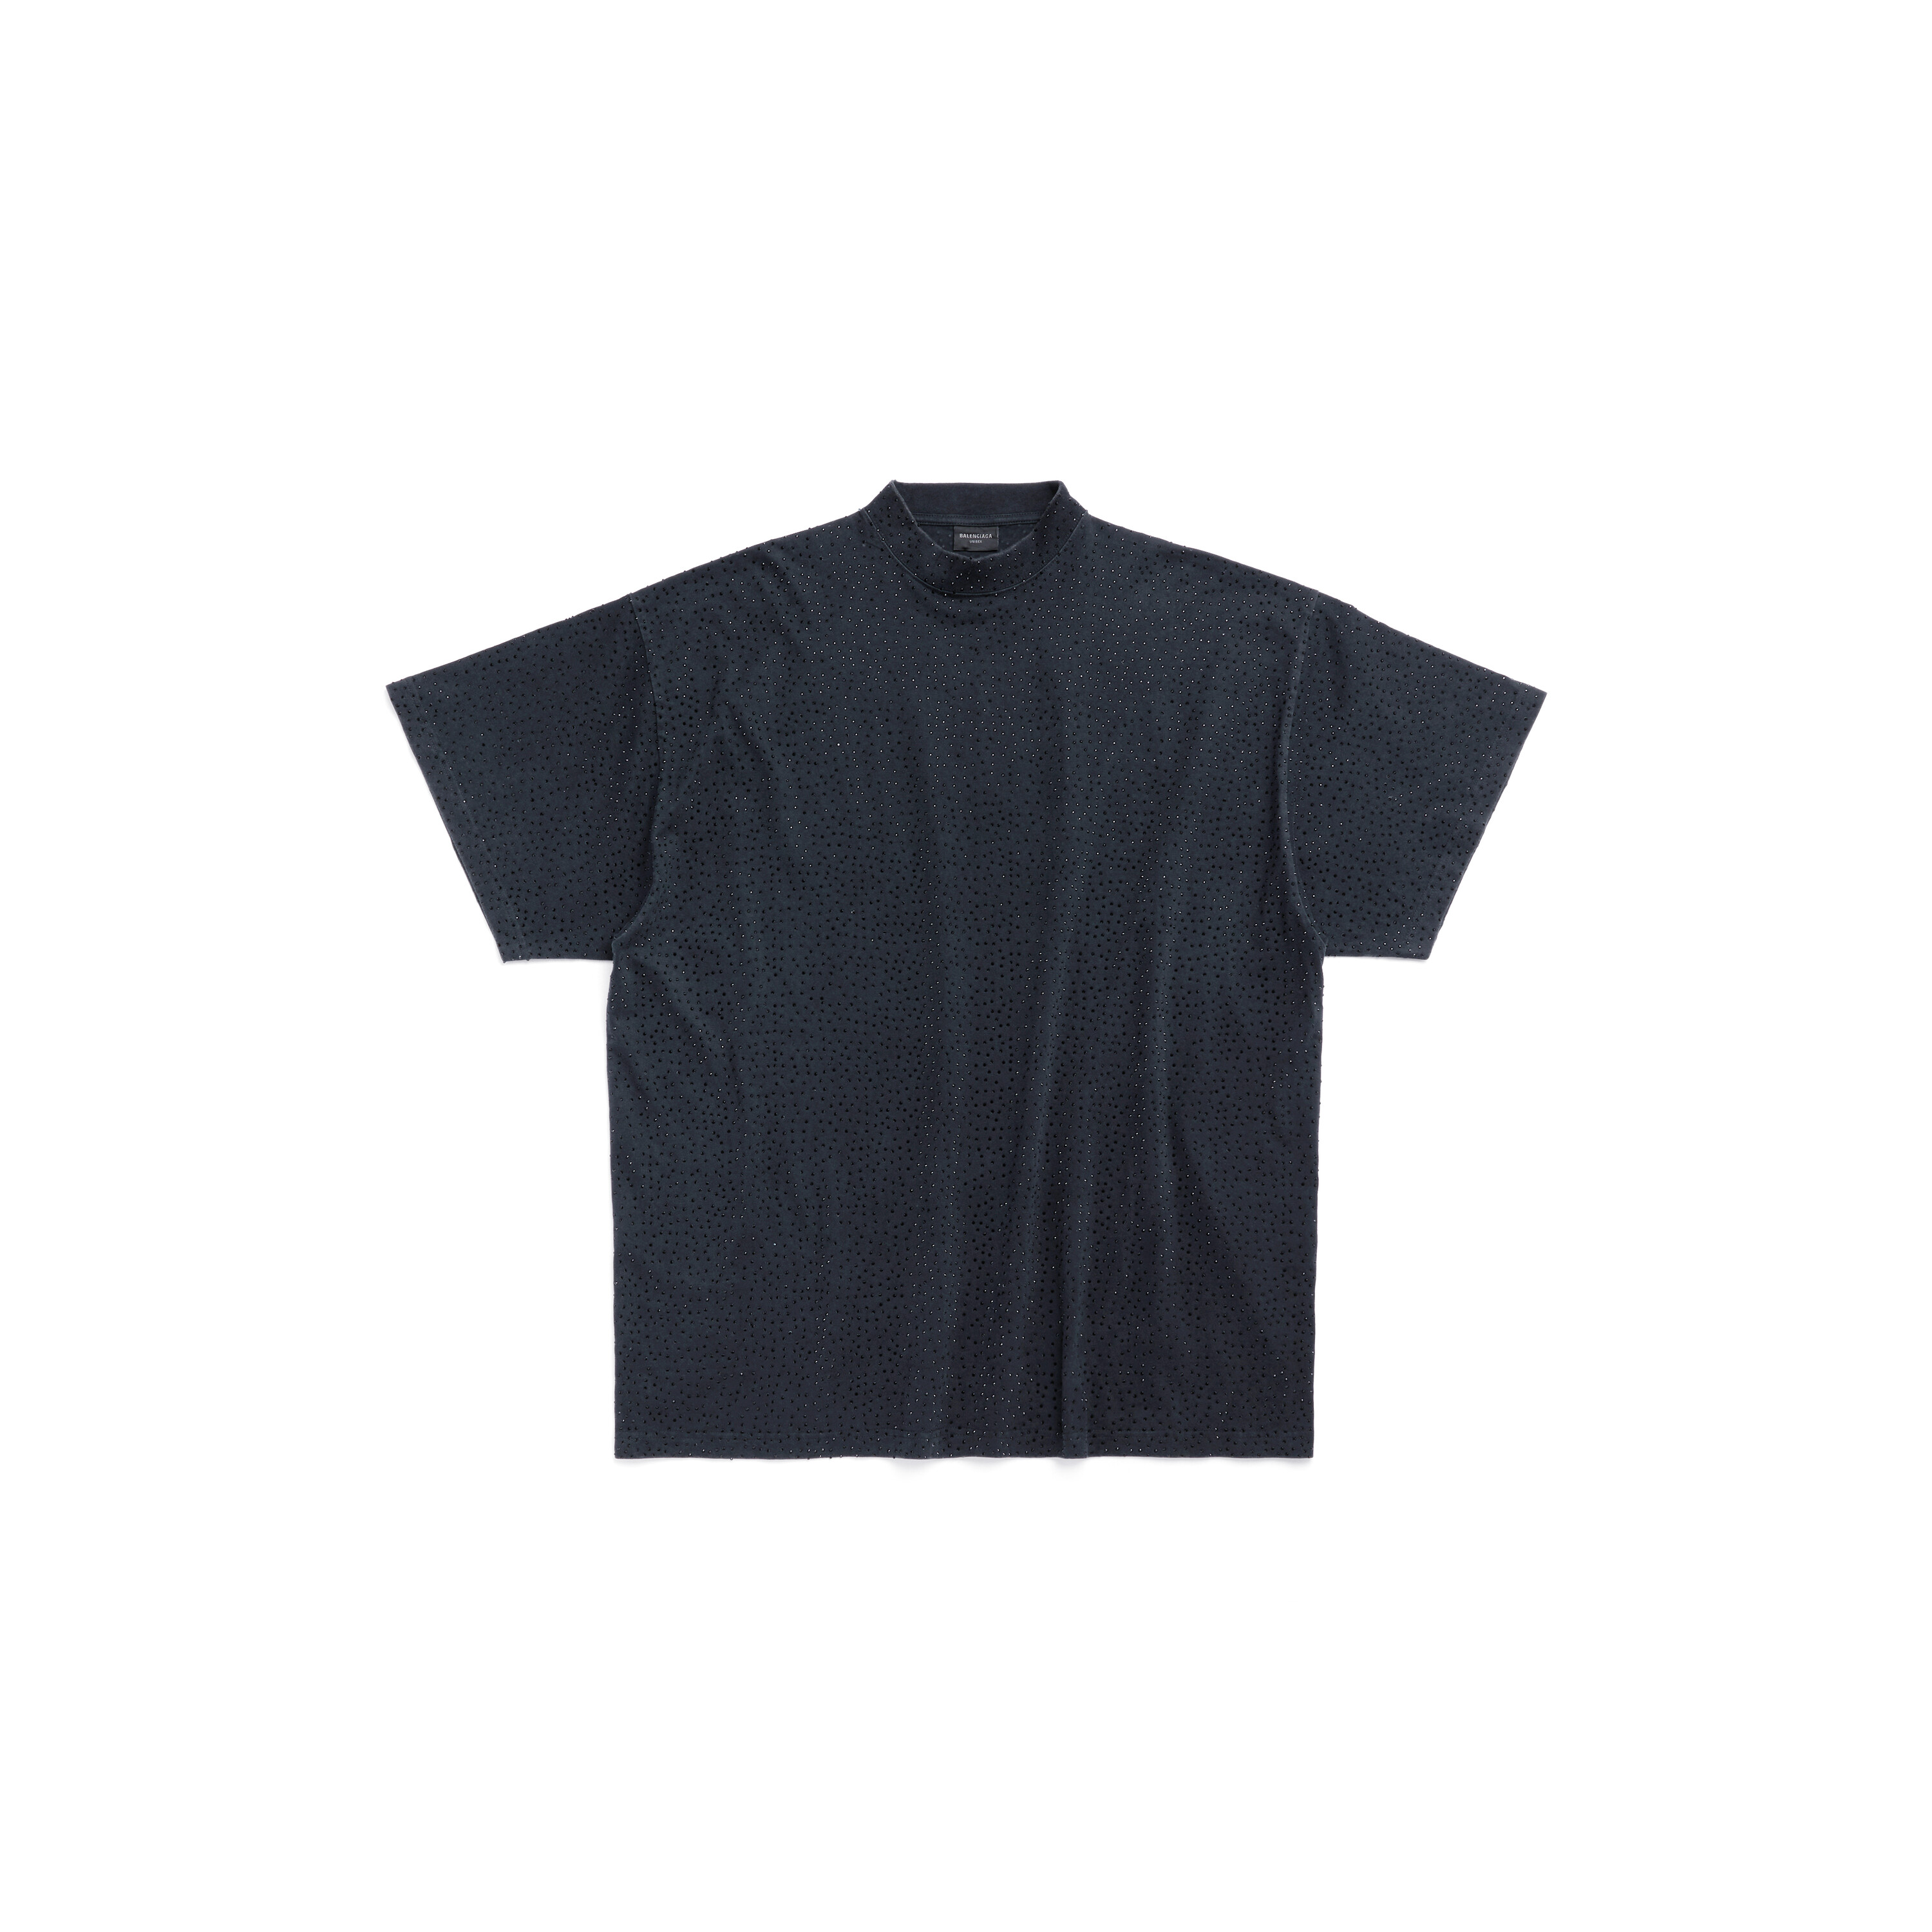 T-shirt in Black Faded | Balenciaga NL